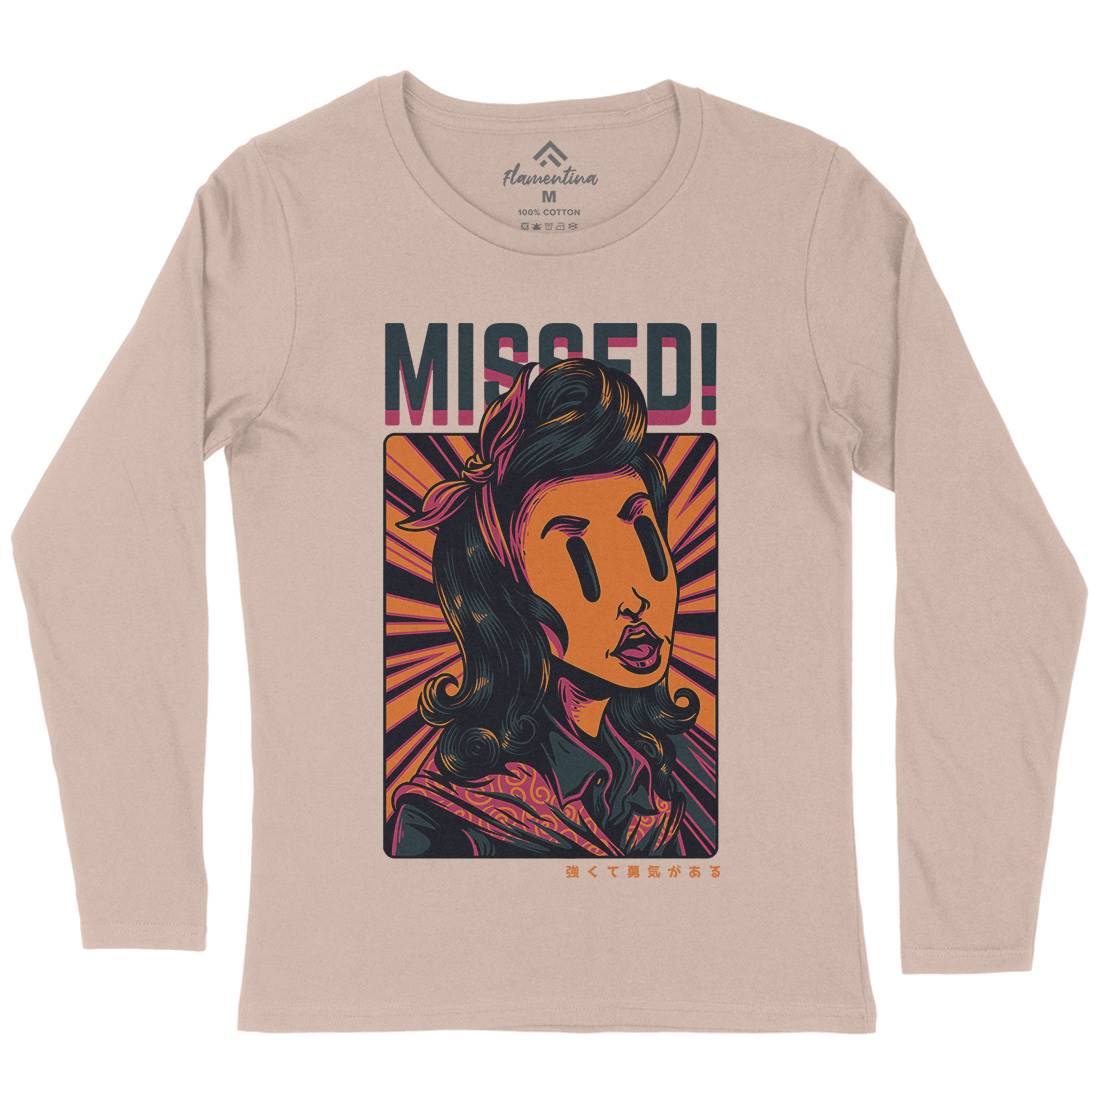 Missed Girl Womens Long Sleeve T-Shirt Retro D654